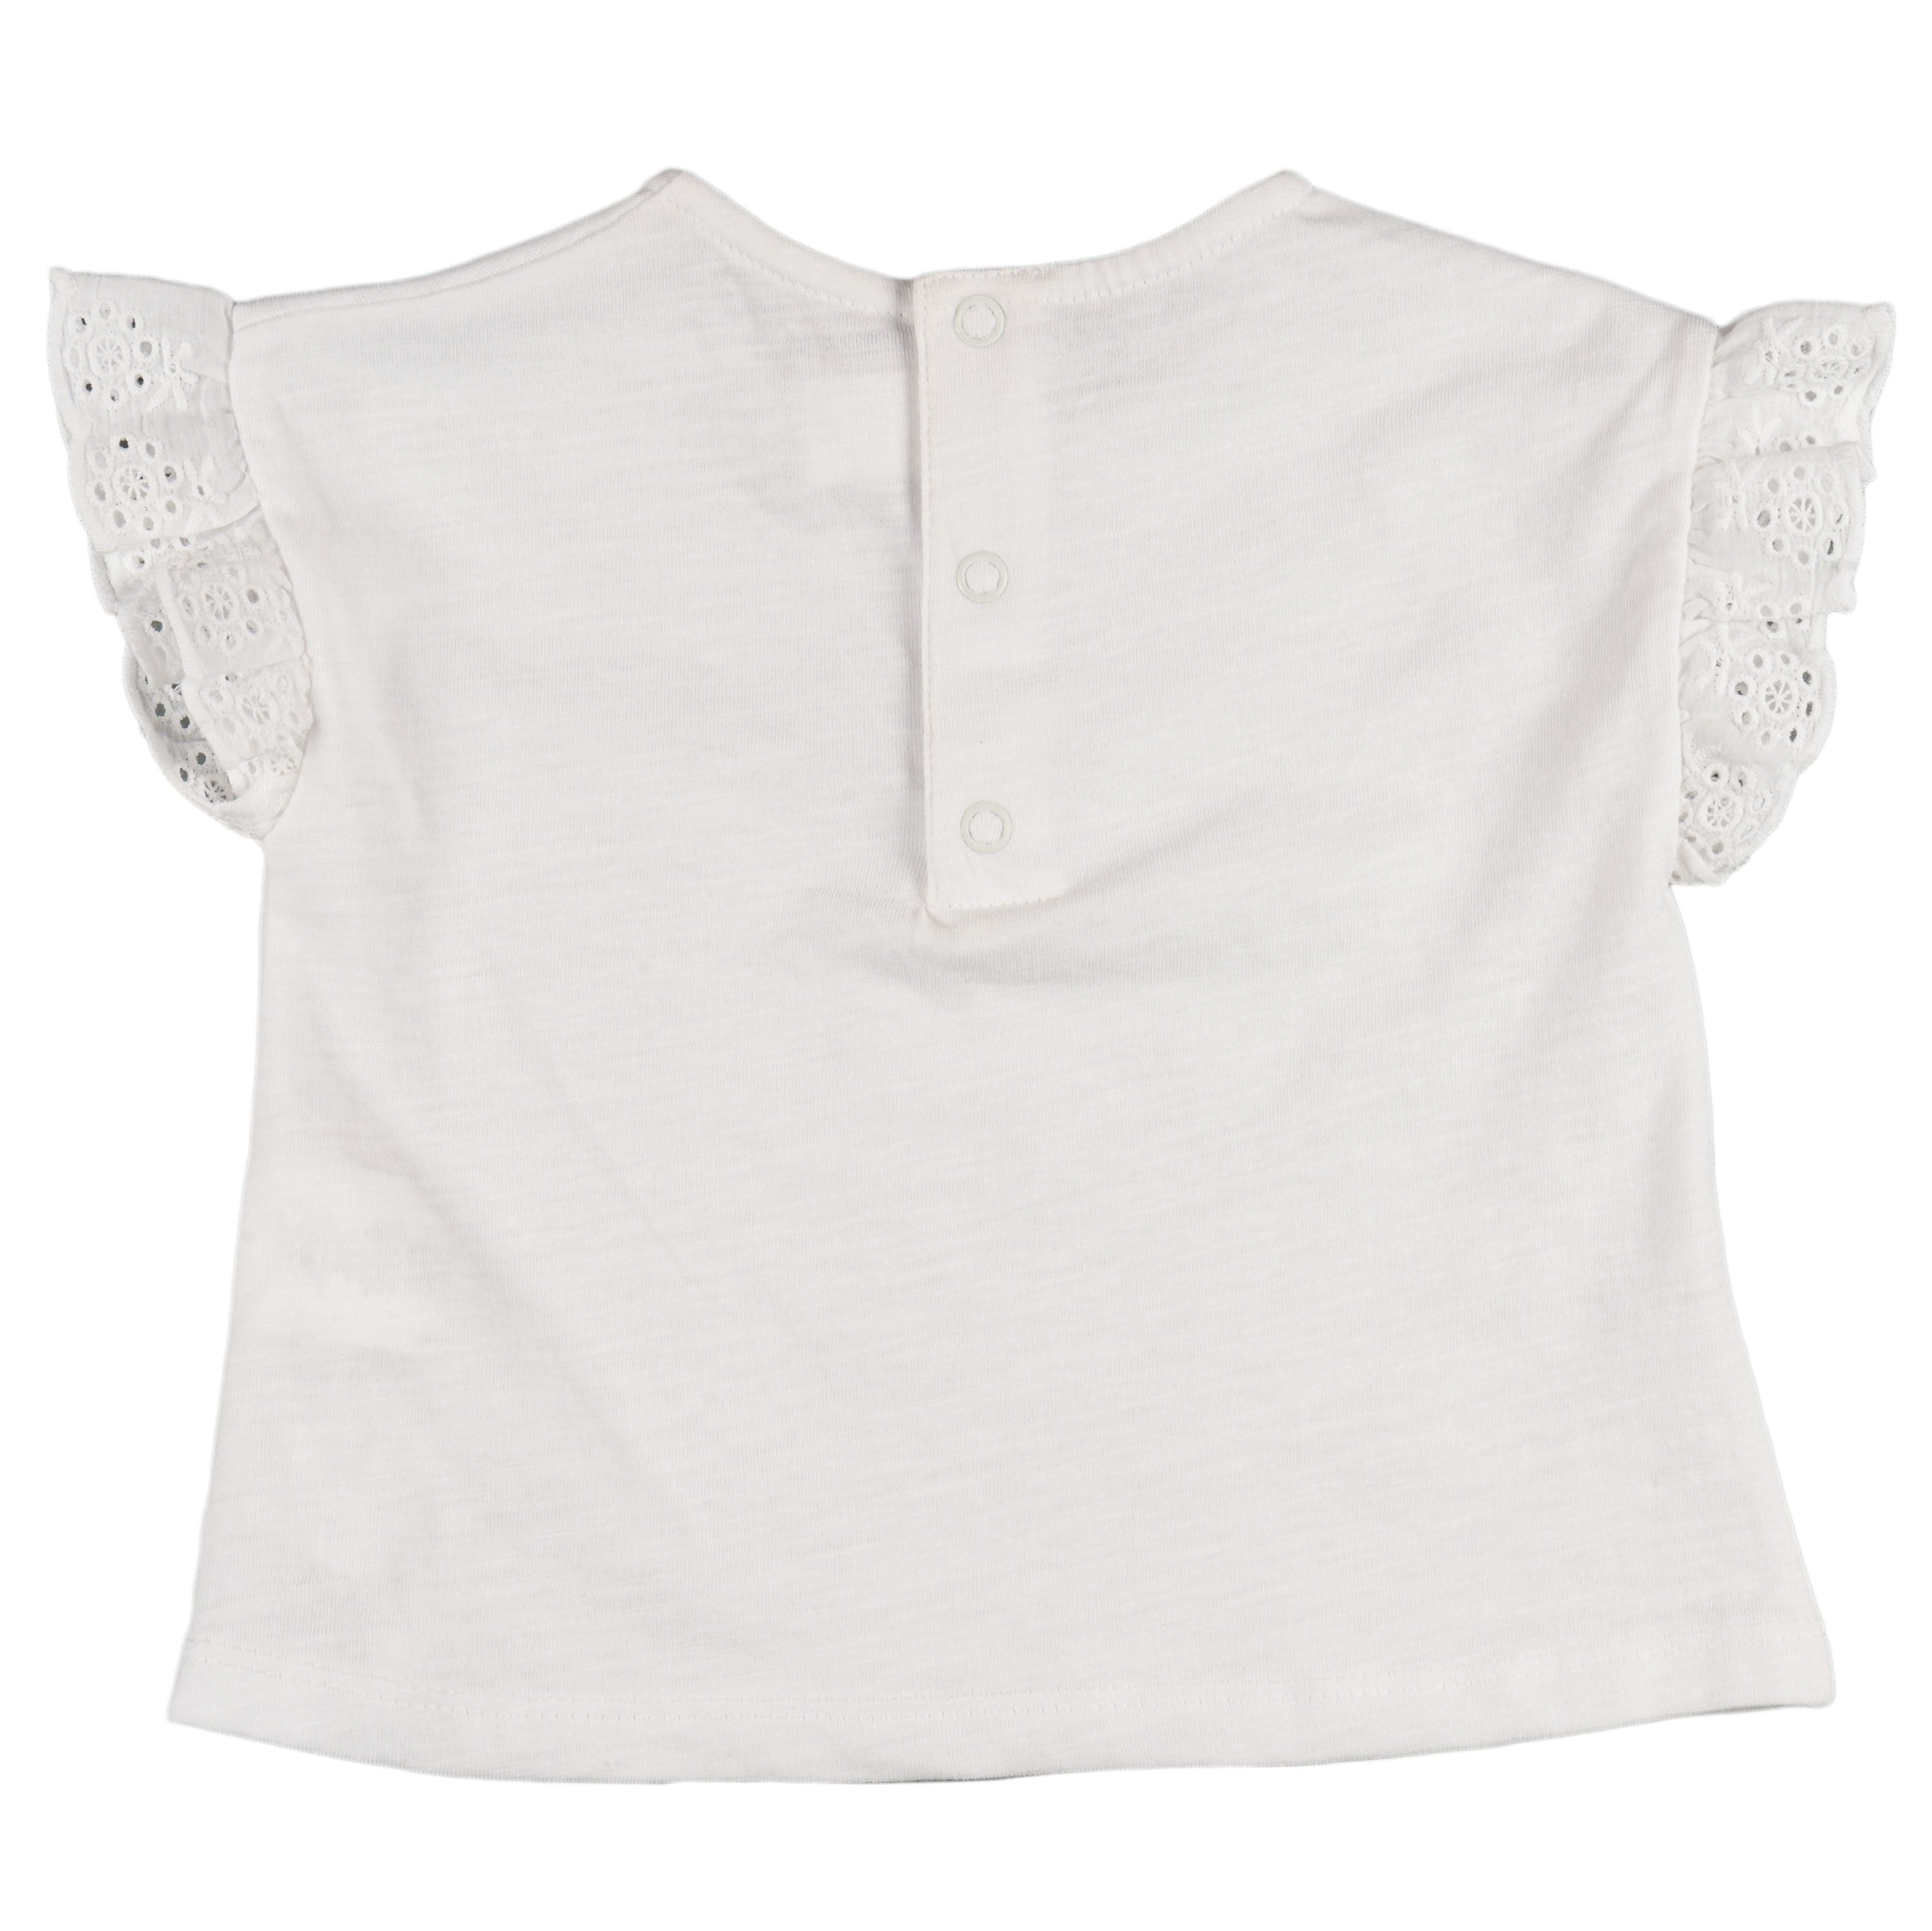 Camiseta de bebé blanco VERANO/Outlet